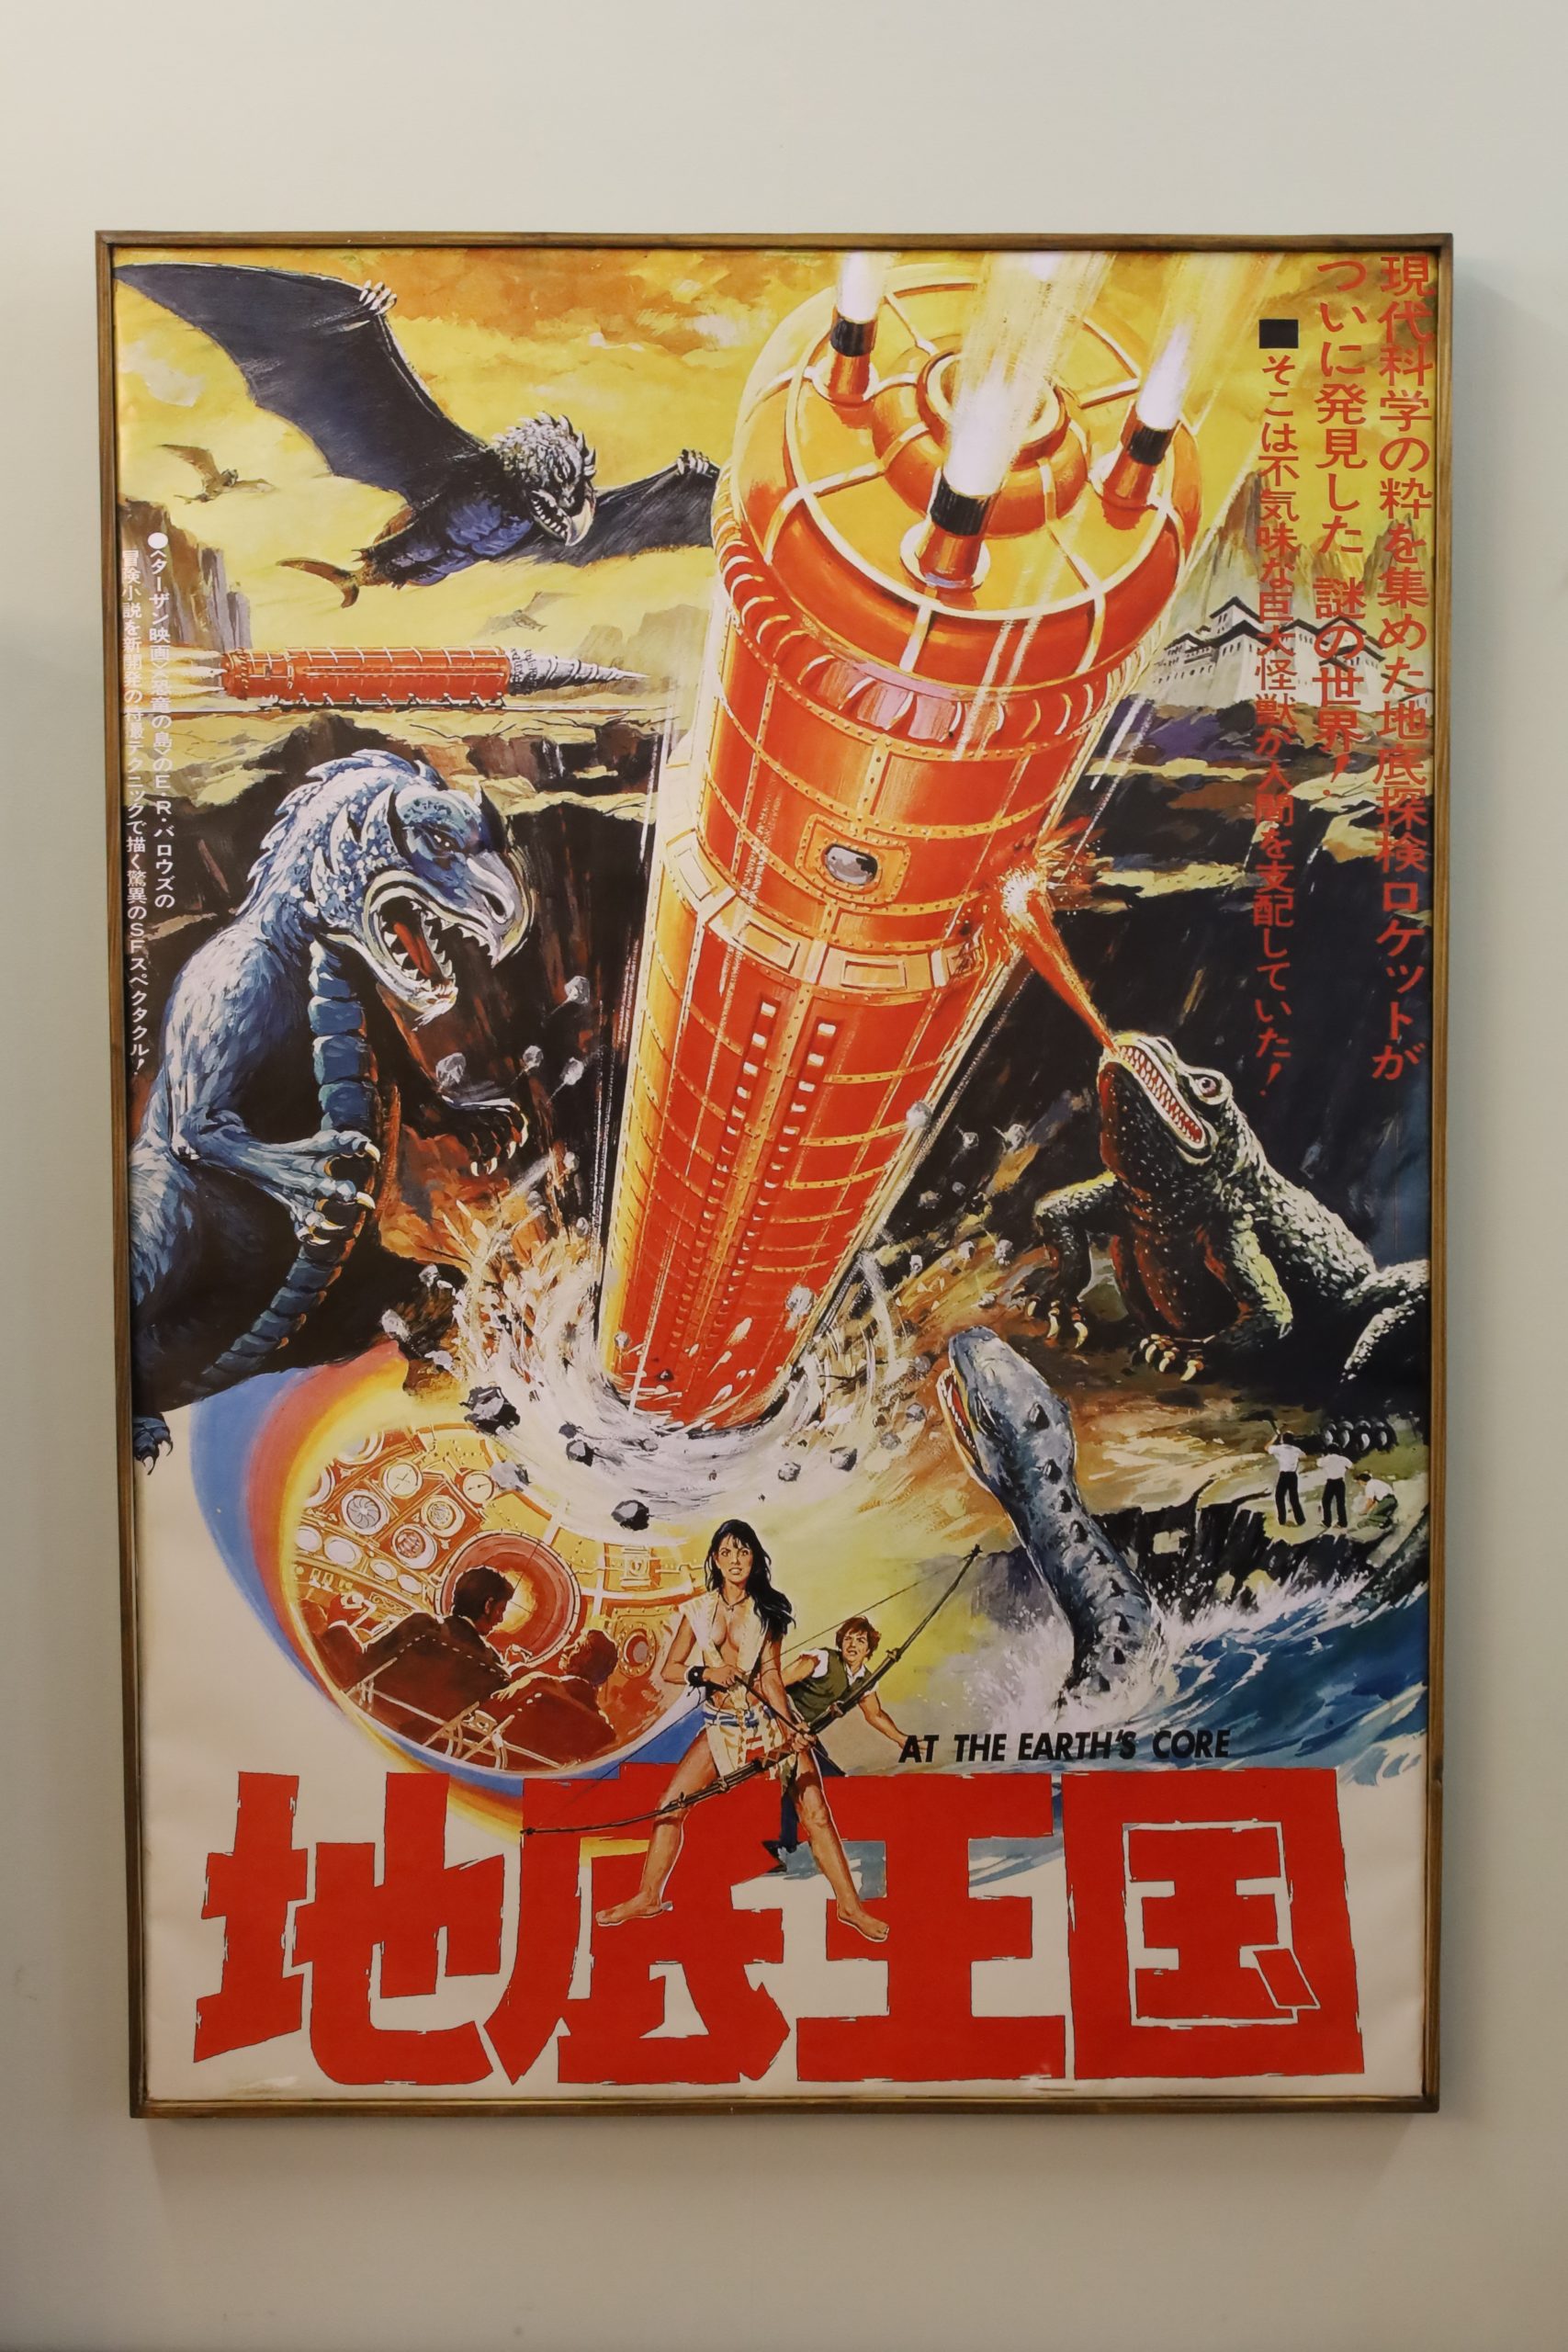 Japanese Monster Kaiju Movie Poster- Image 1 | bevintage.ch